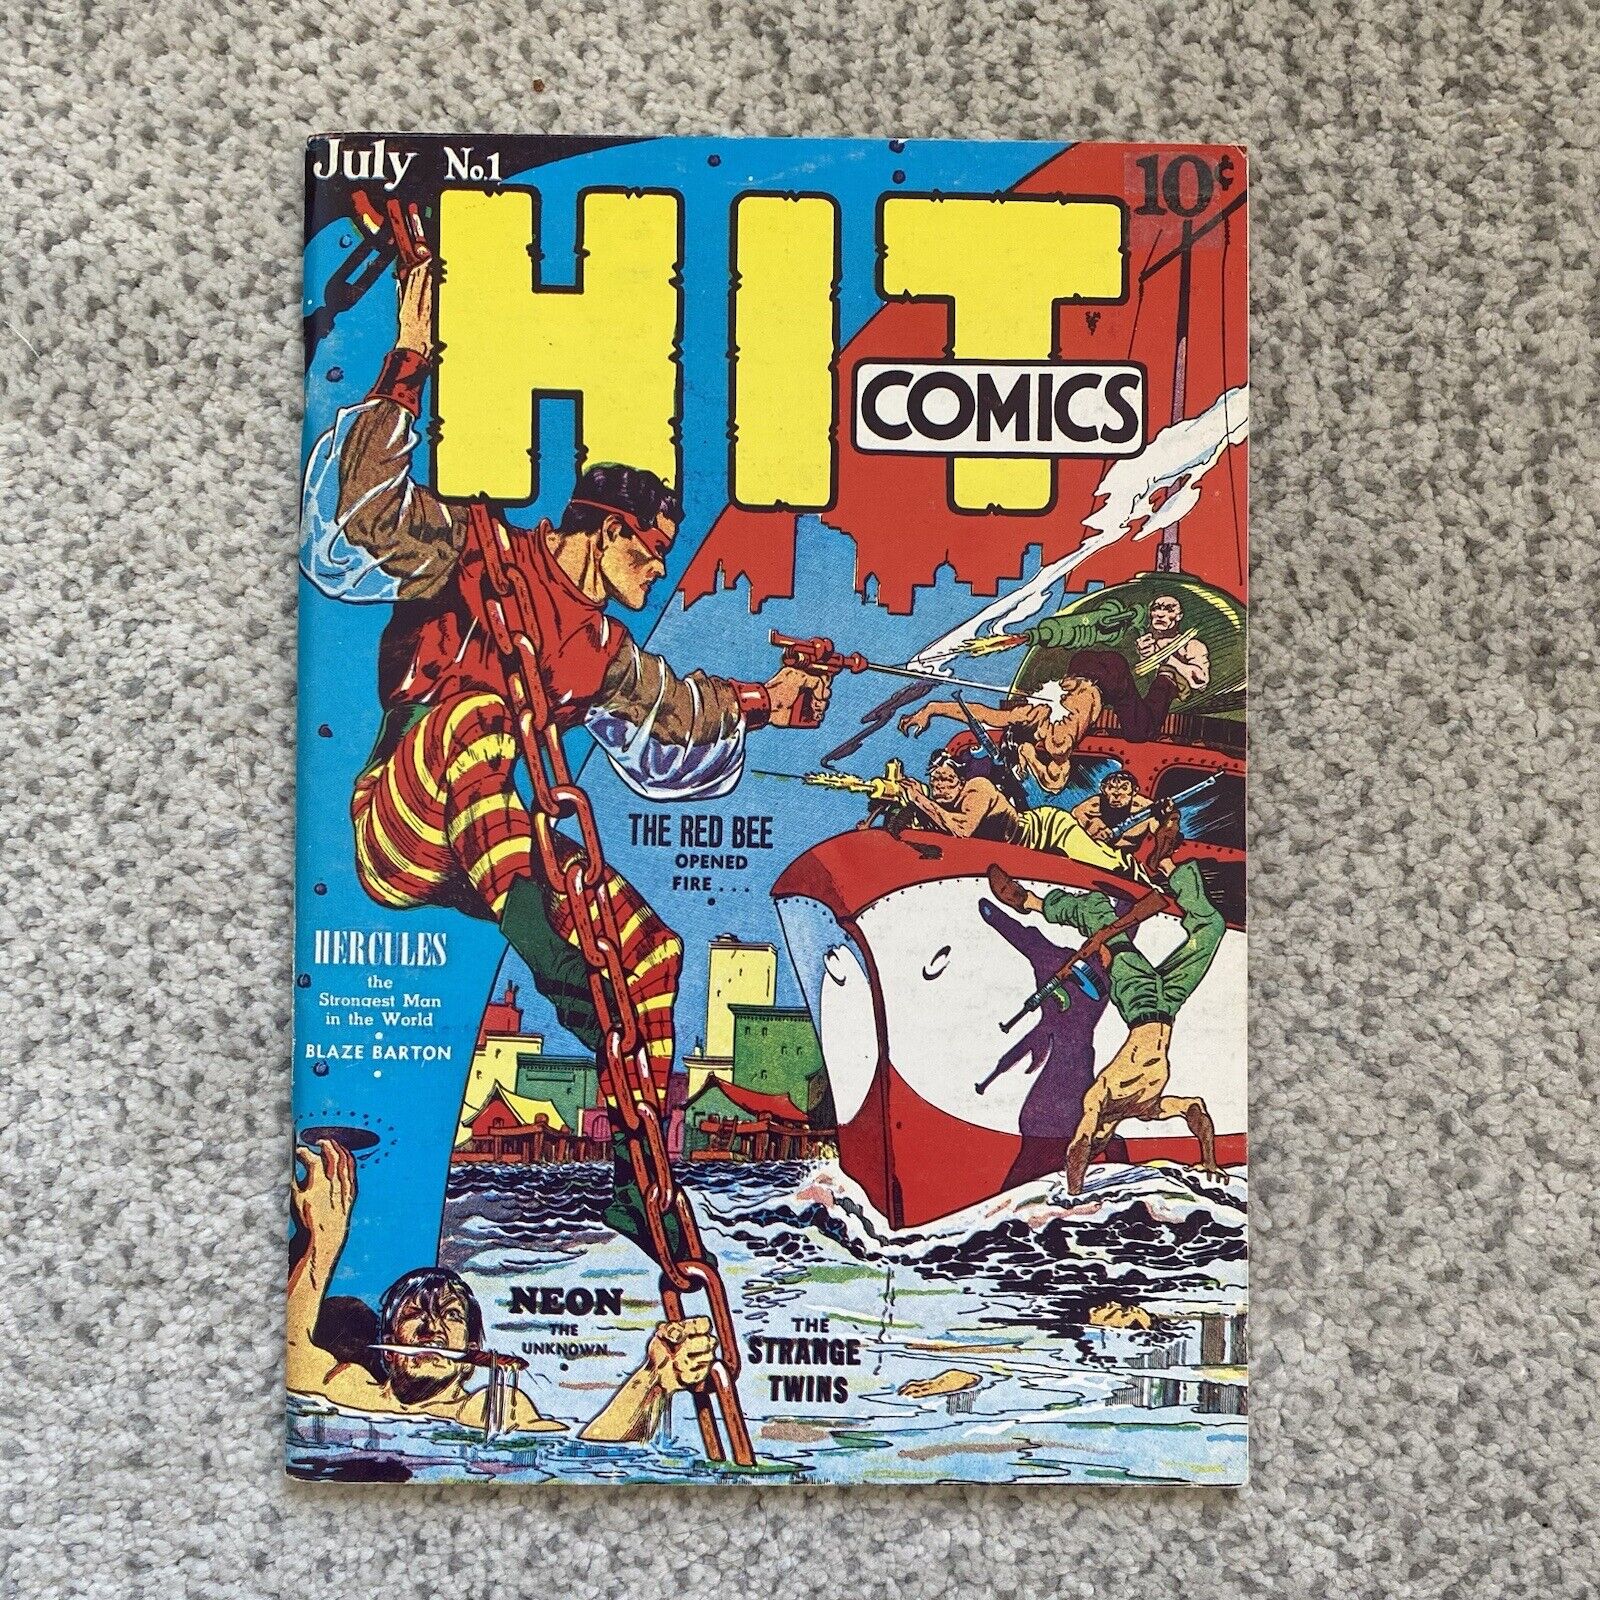 Hit Comics # 1 - Red Bee - Hercules - Neon - Strange Twins - Flashback - 1940